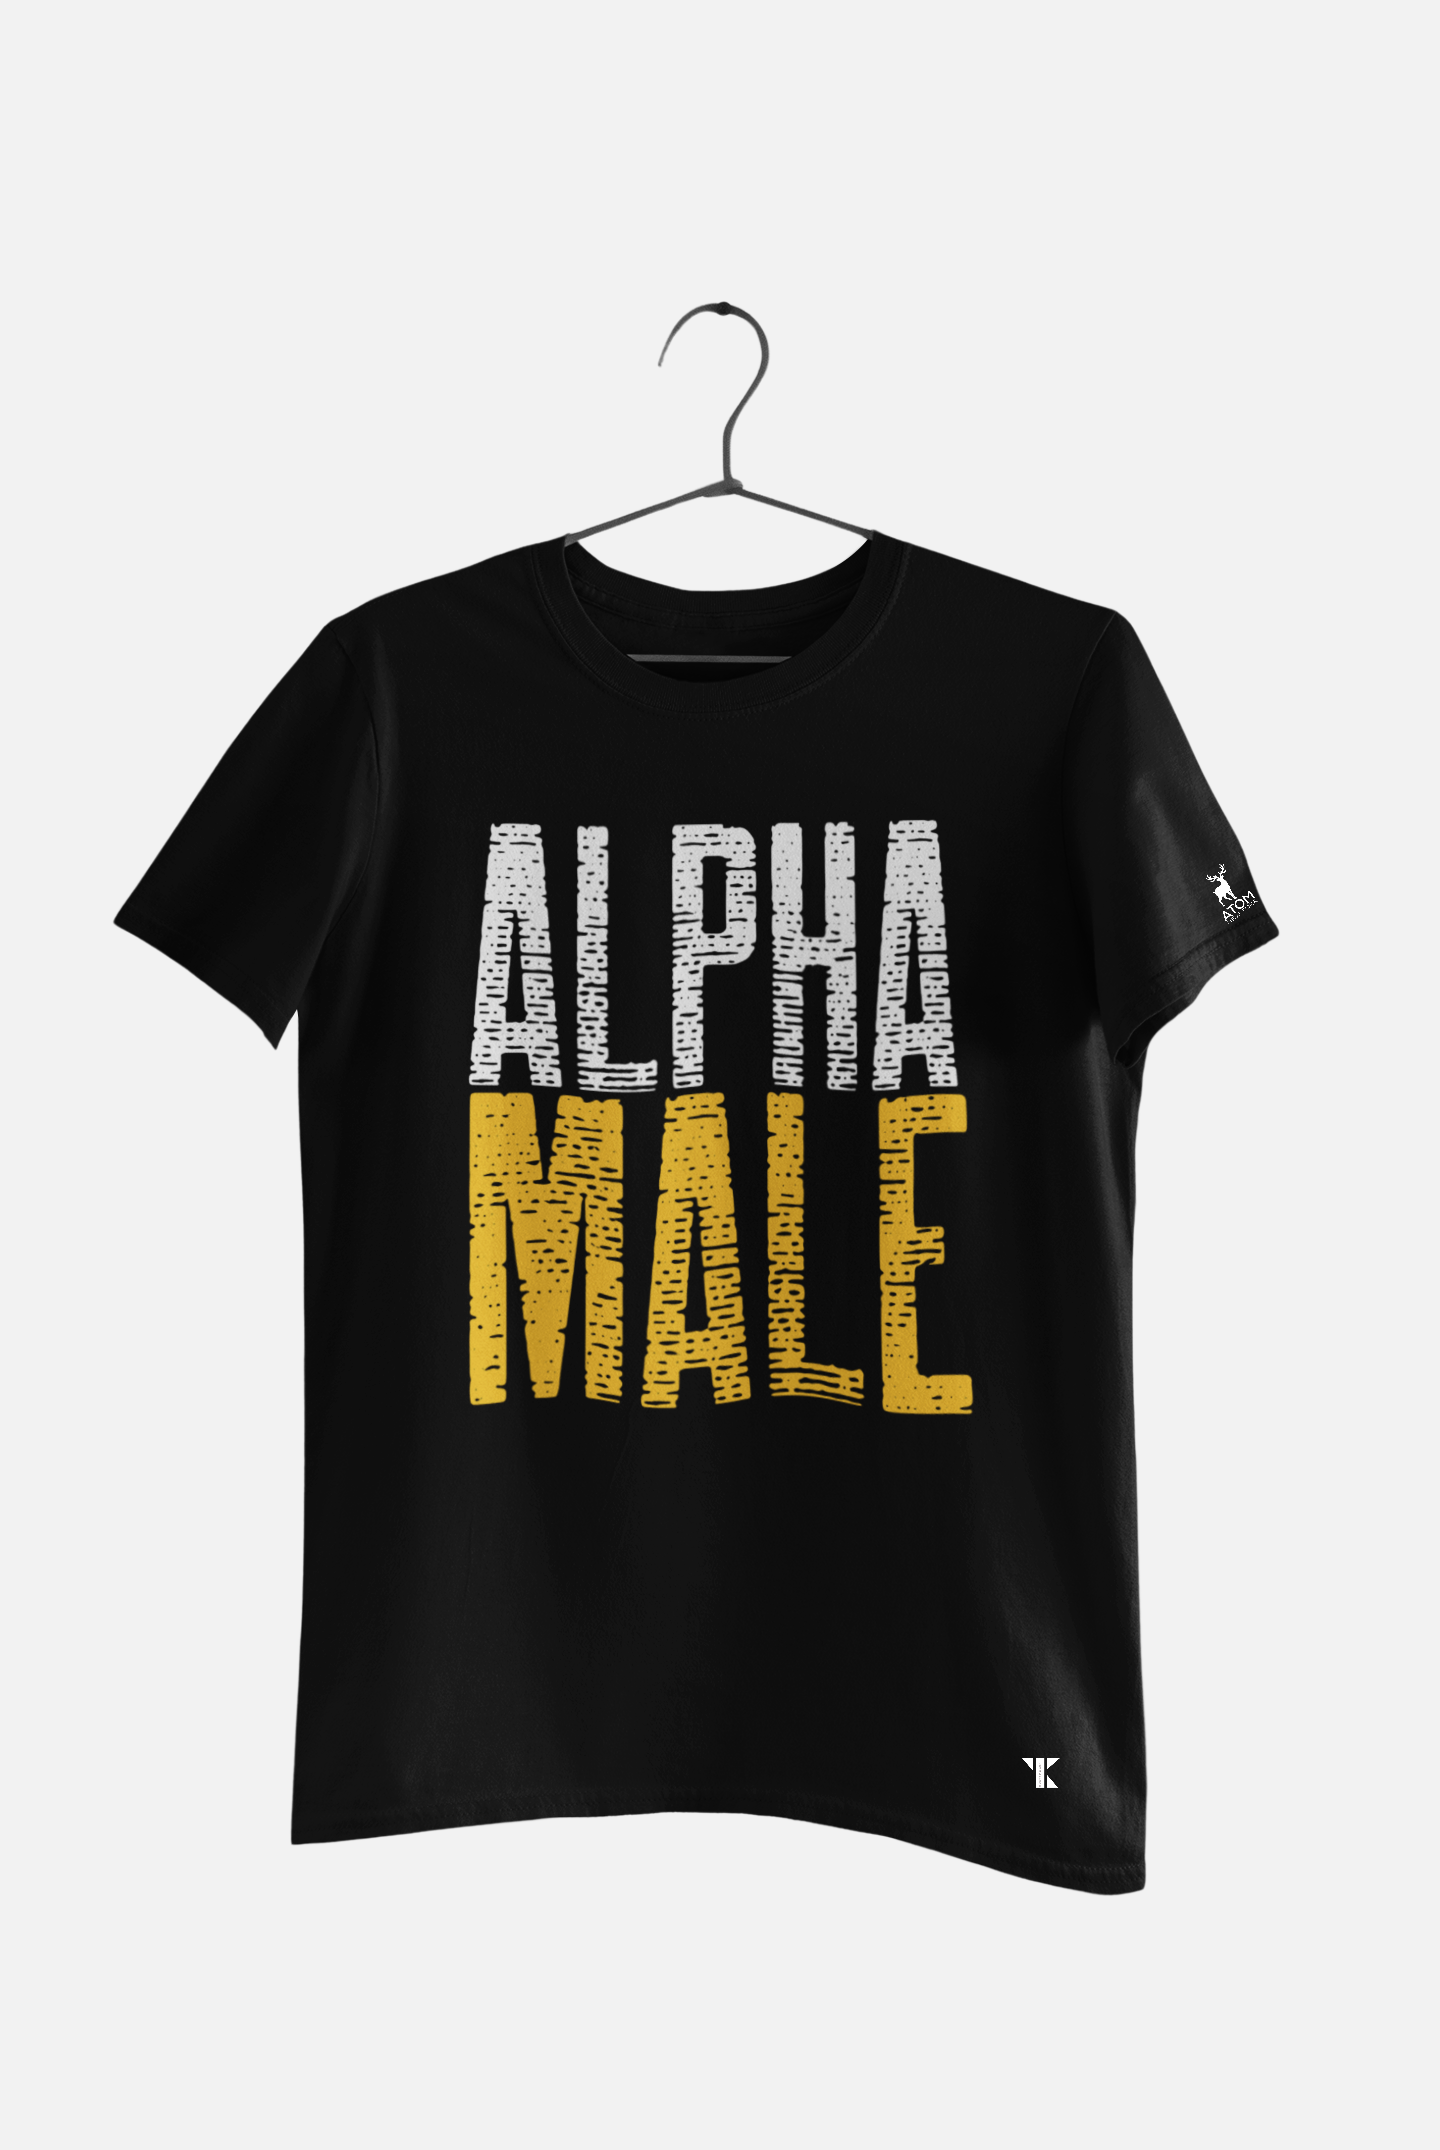 Alpha Male Black Pure Cotton T-Shirt For Men | Tarun Kapoor Collection